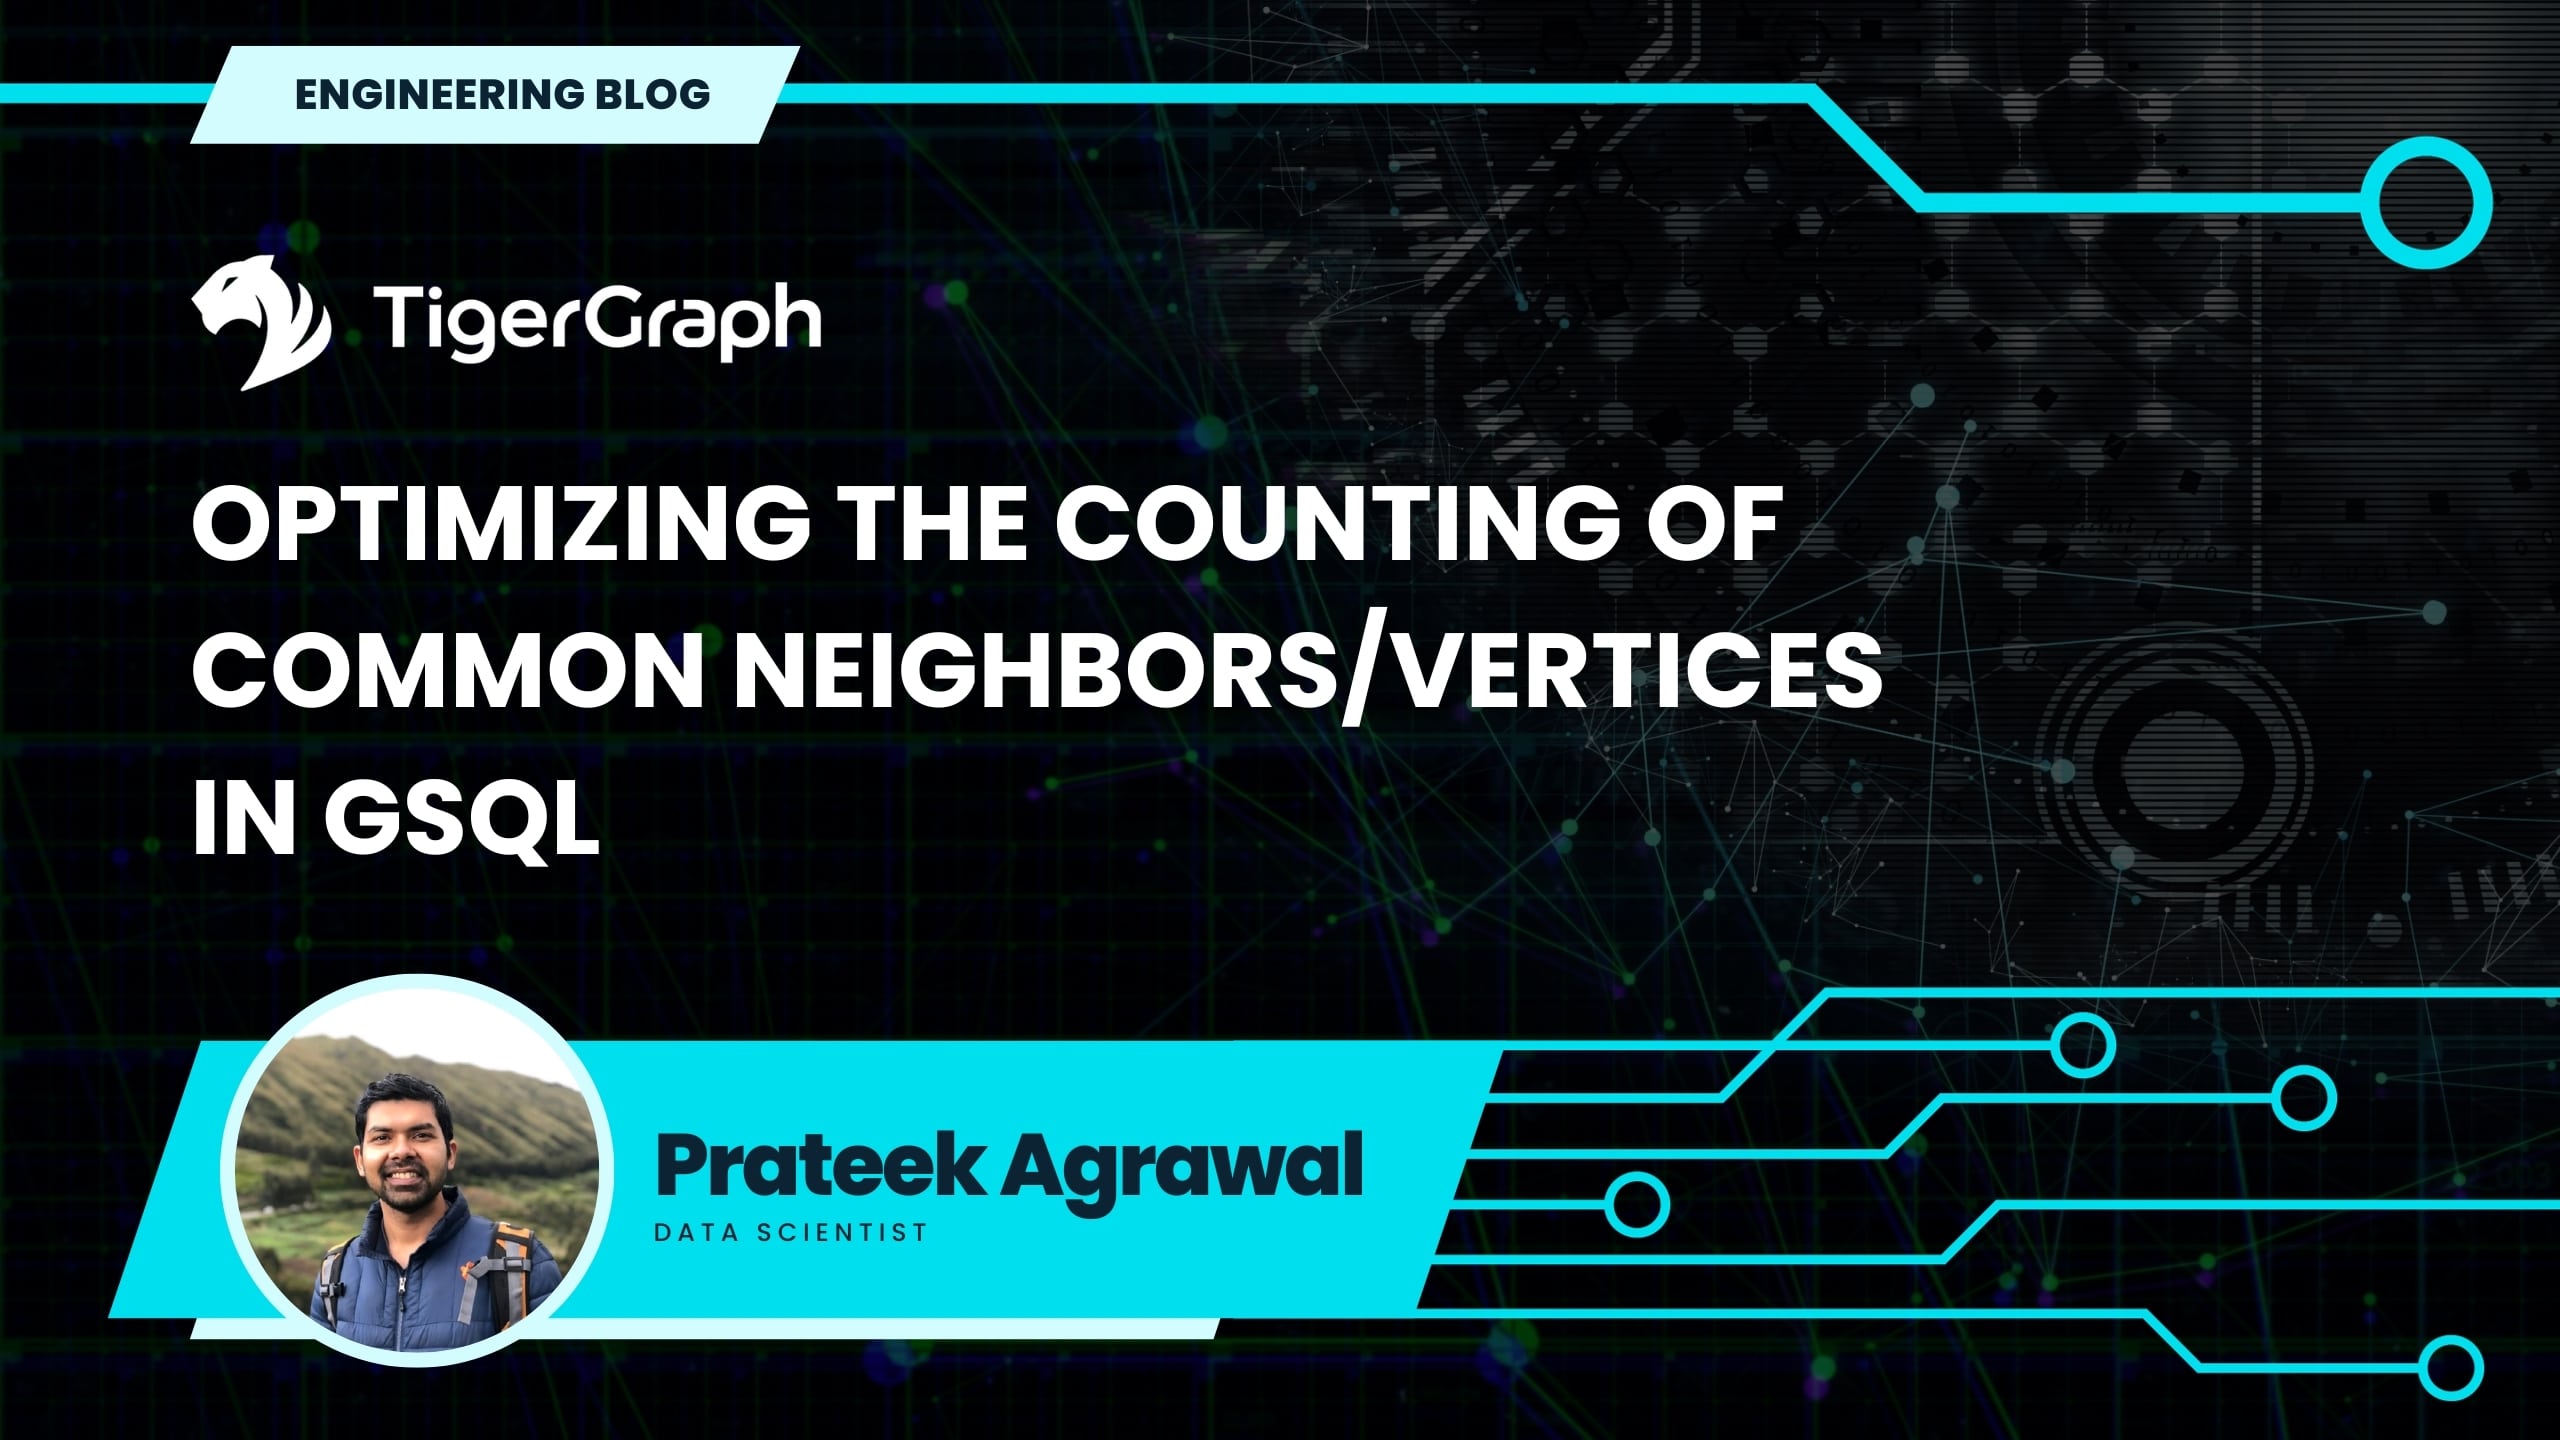 Optimized counting of neighbors by Prateek Agarwal